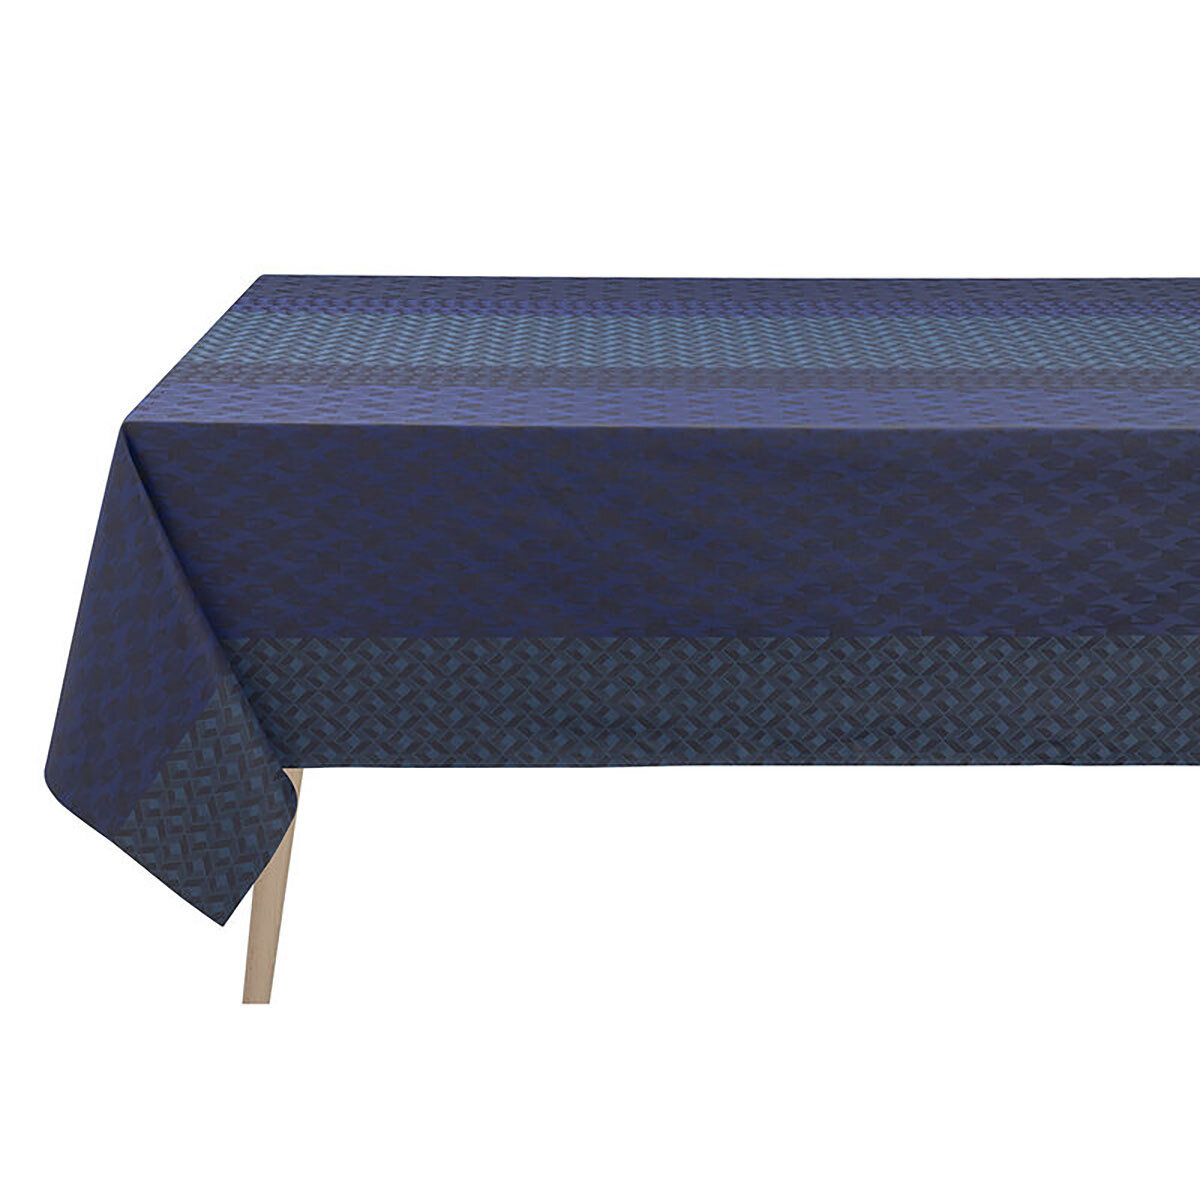 Le Jacquard Francais Tablecloth Caractere Blue 100% Coated Cotton 59 x 86 Inch 28196